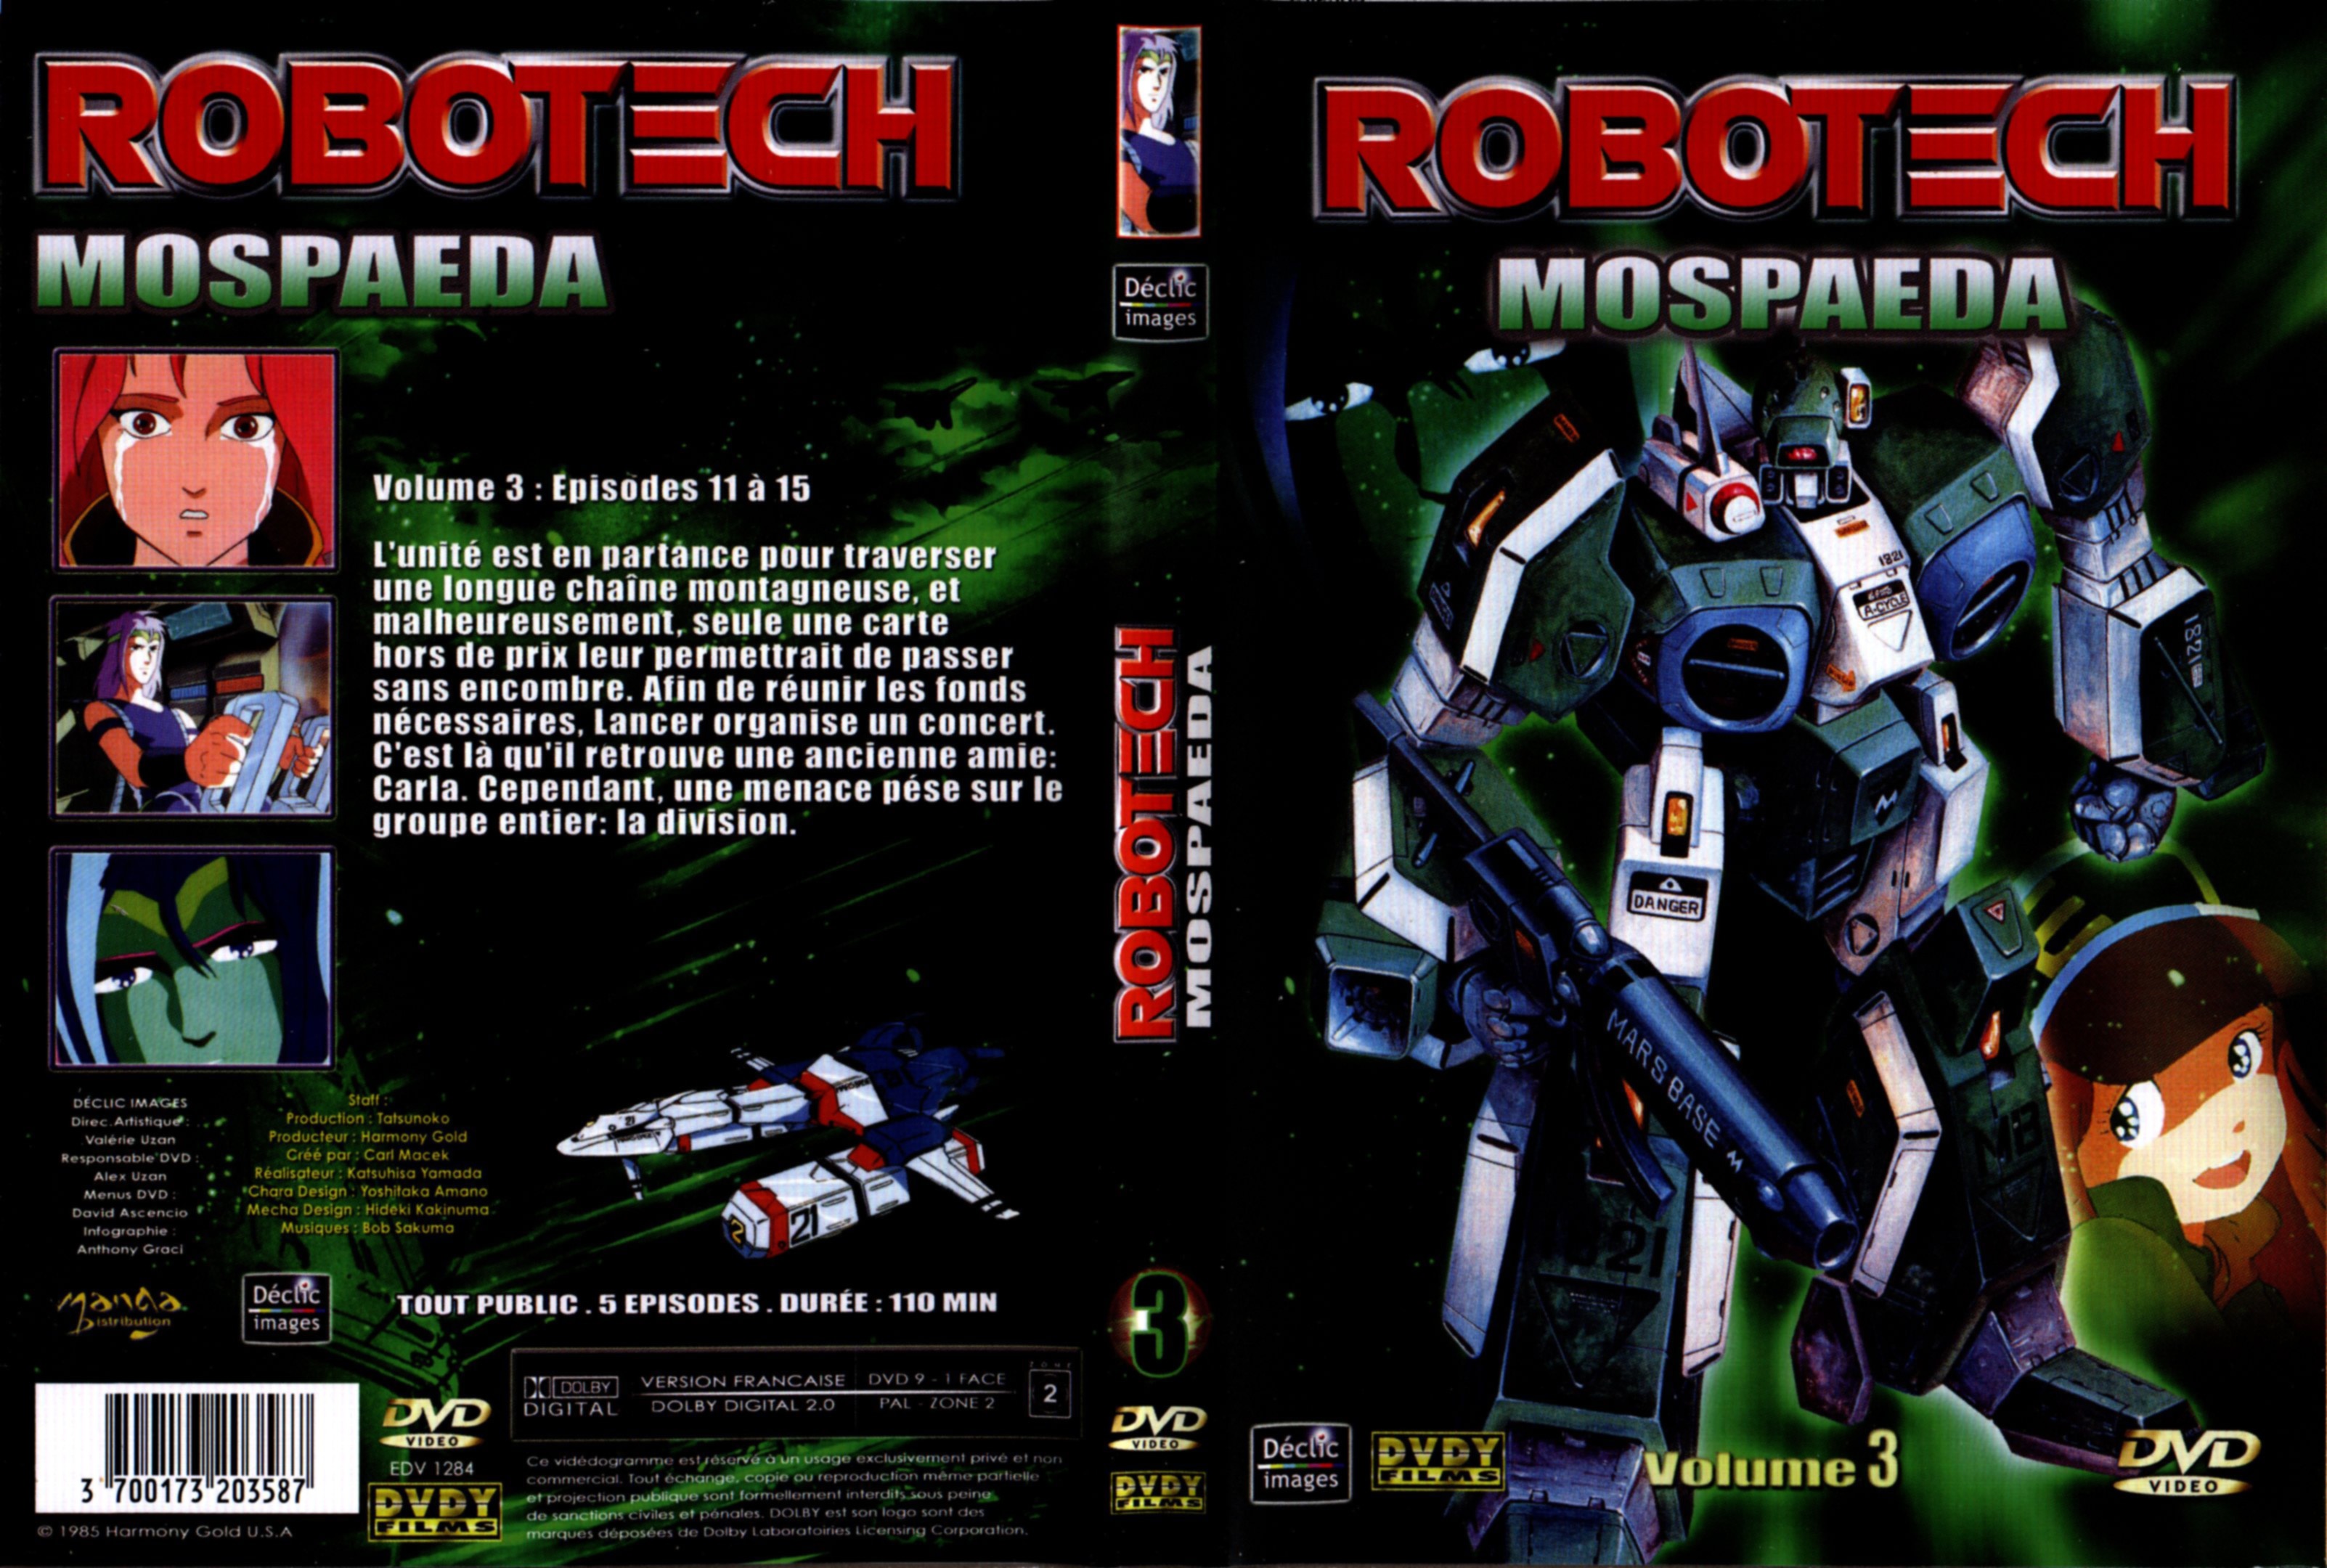 Jaquette DVD Robotech Mospaeda vol 03